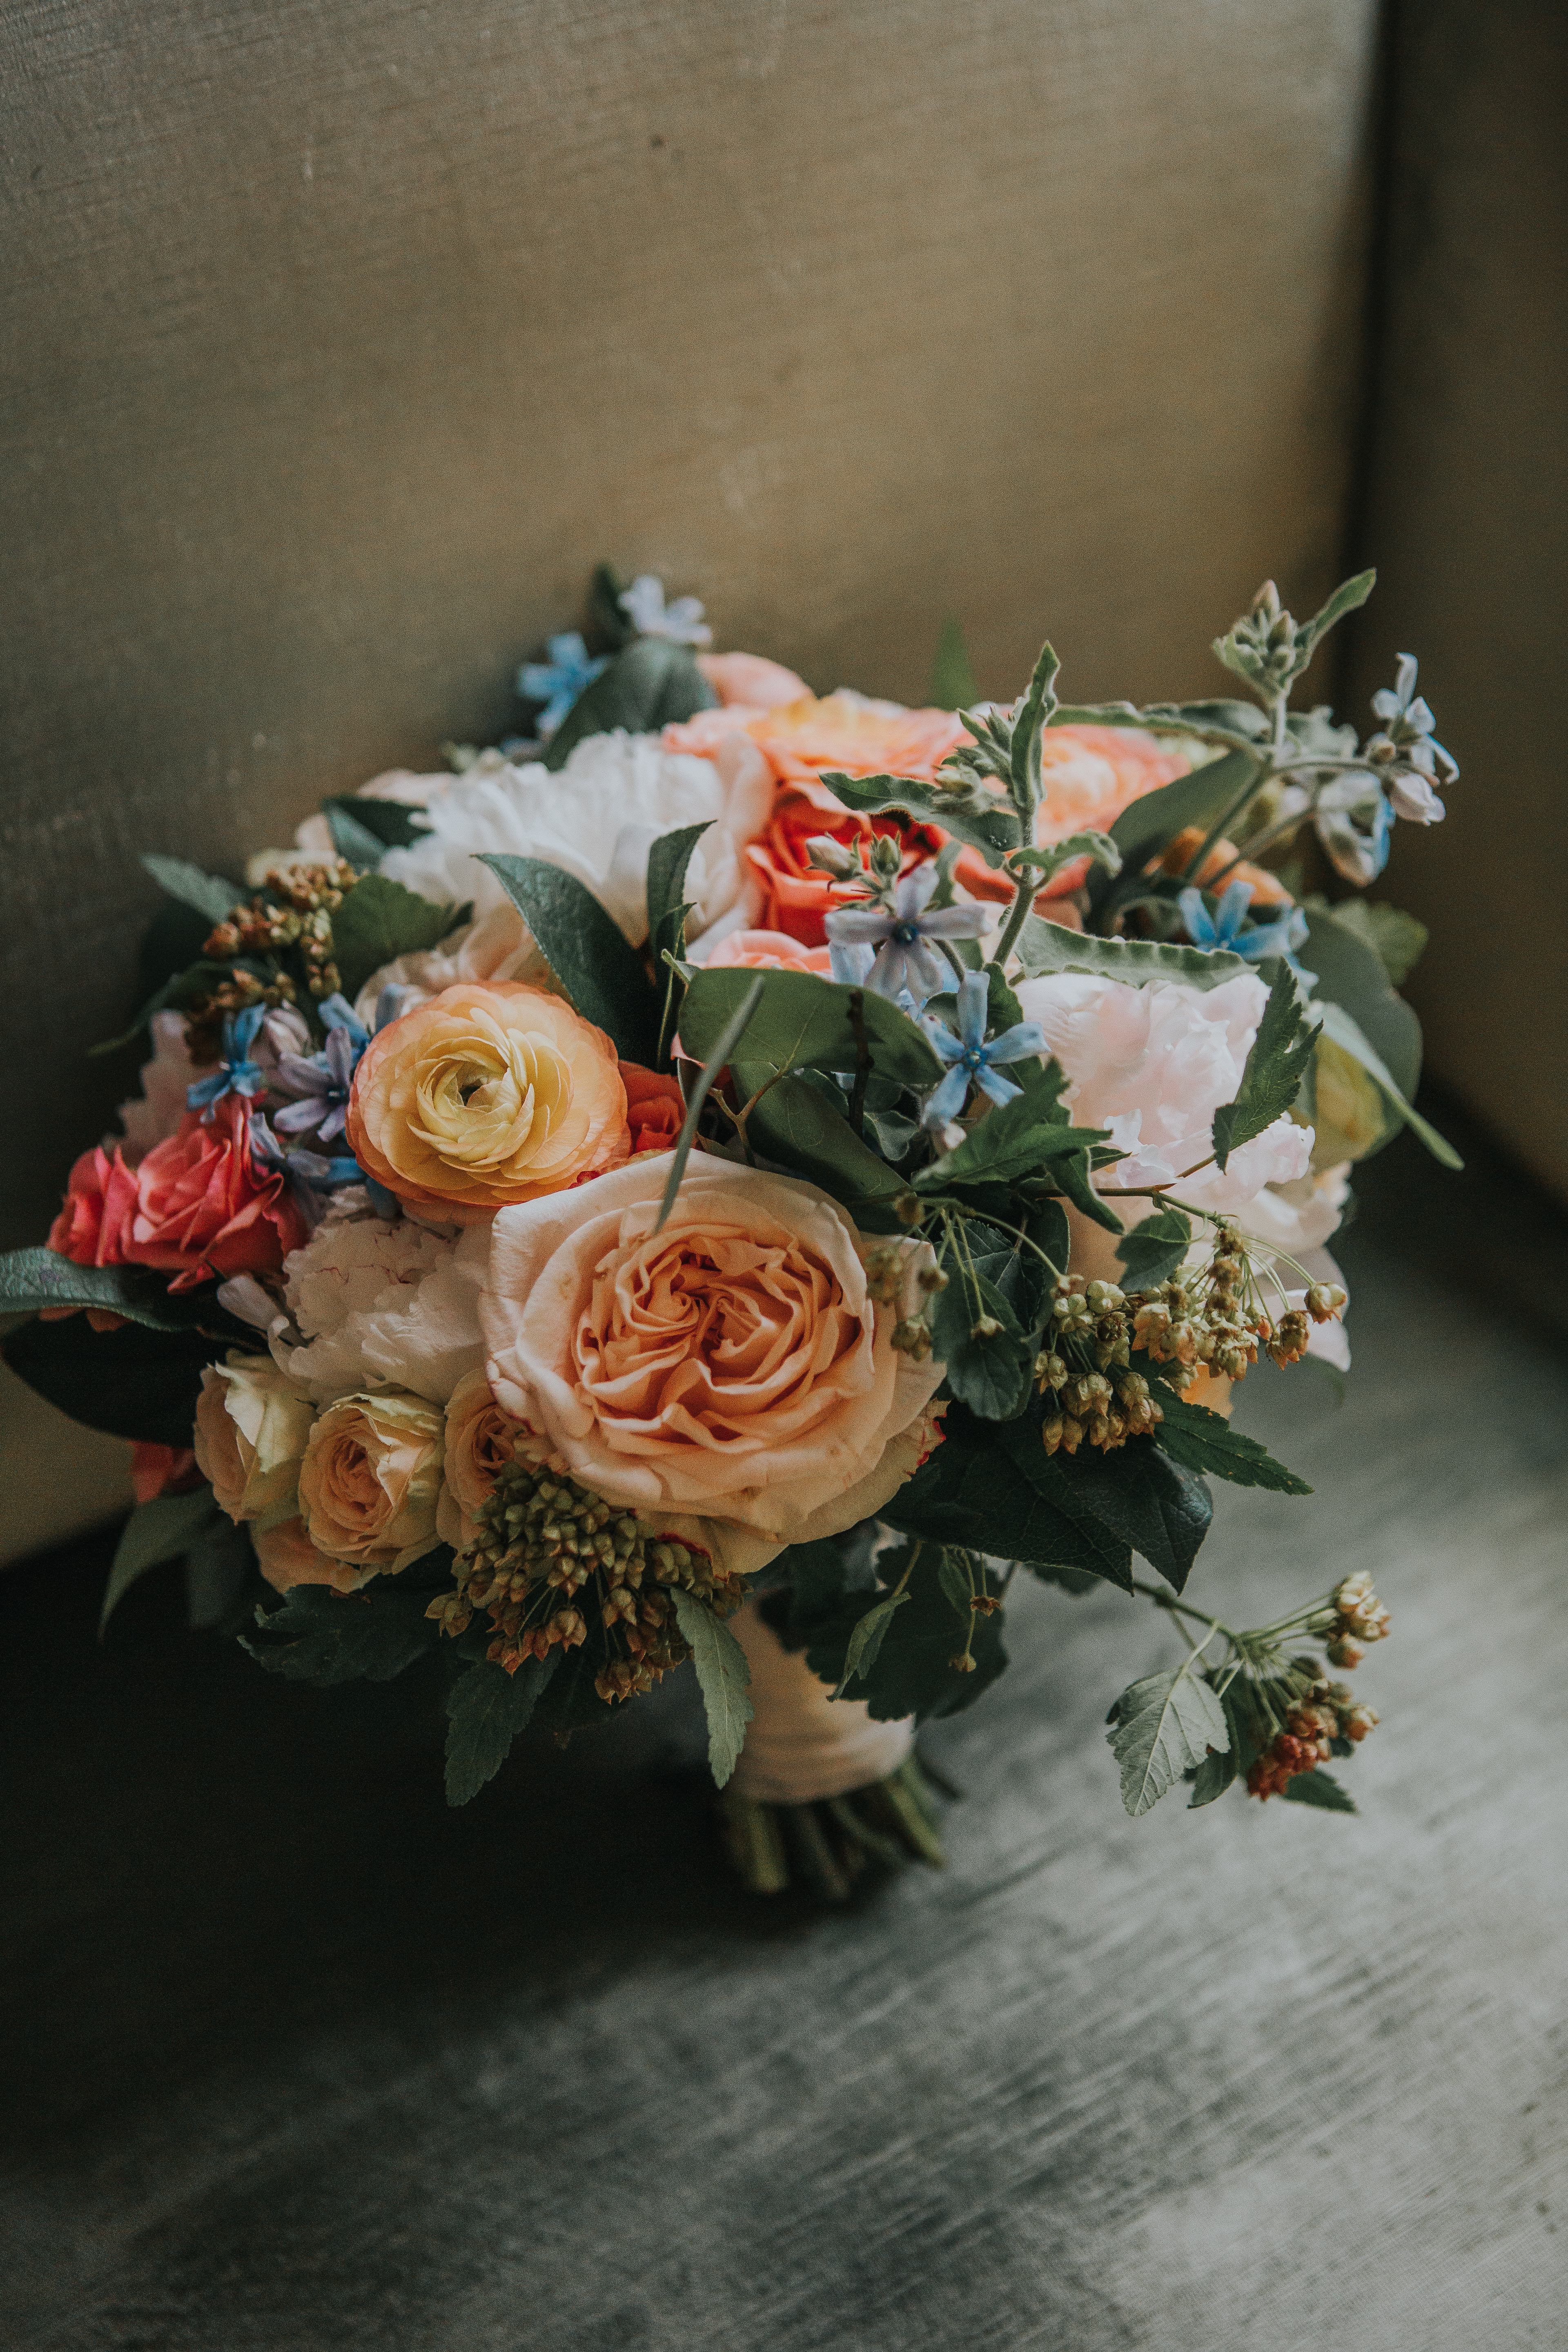 Bridal bouquet vintage style with orange ranunculus, peach garden roses, and tweedia.